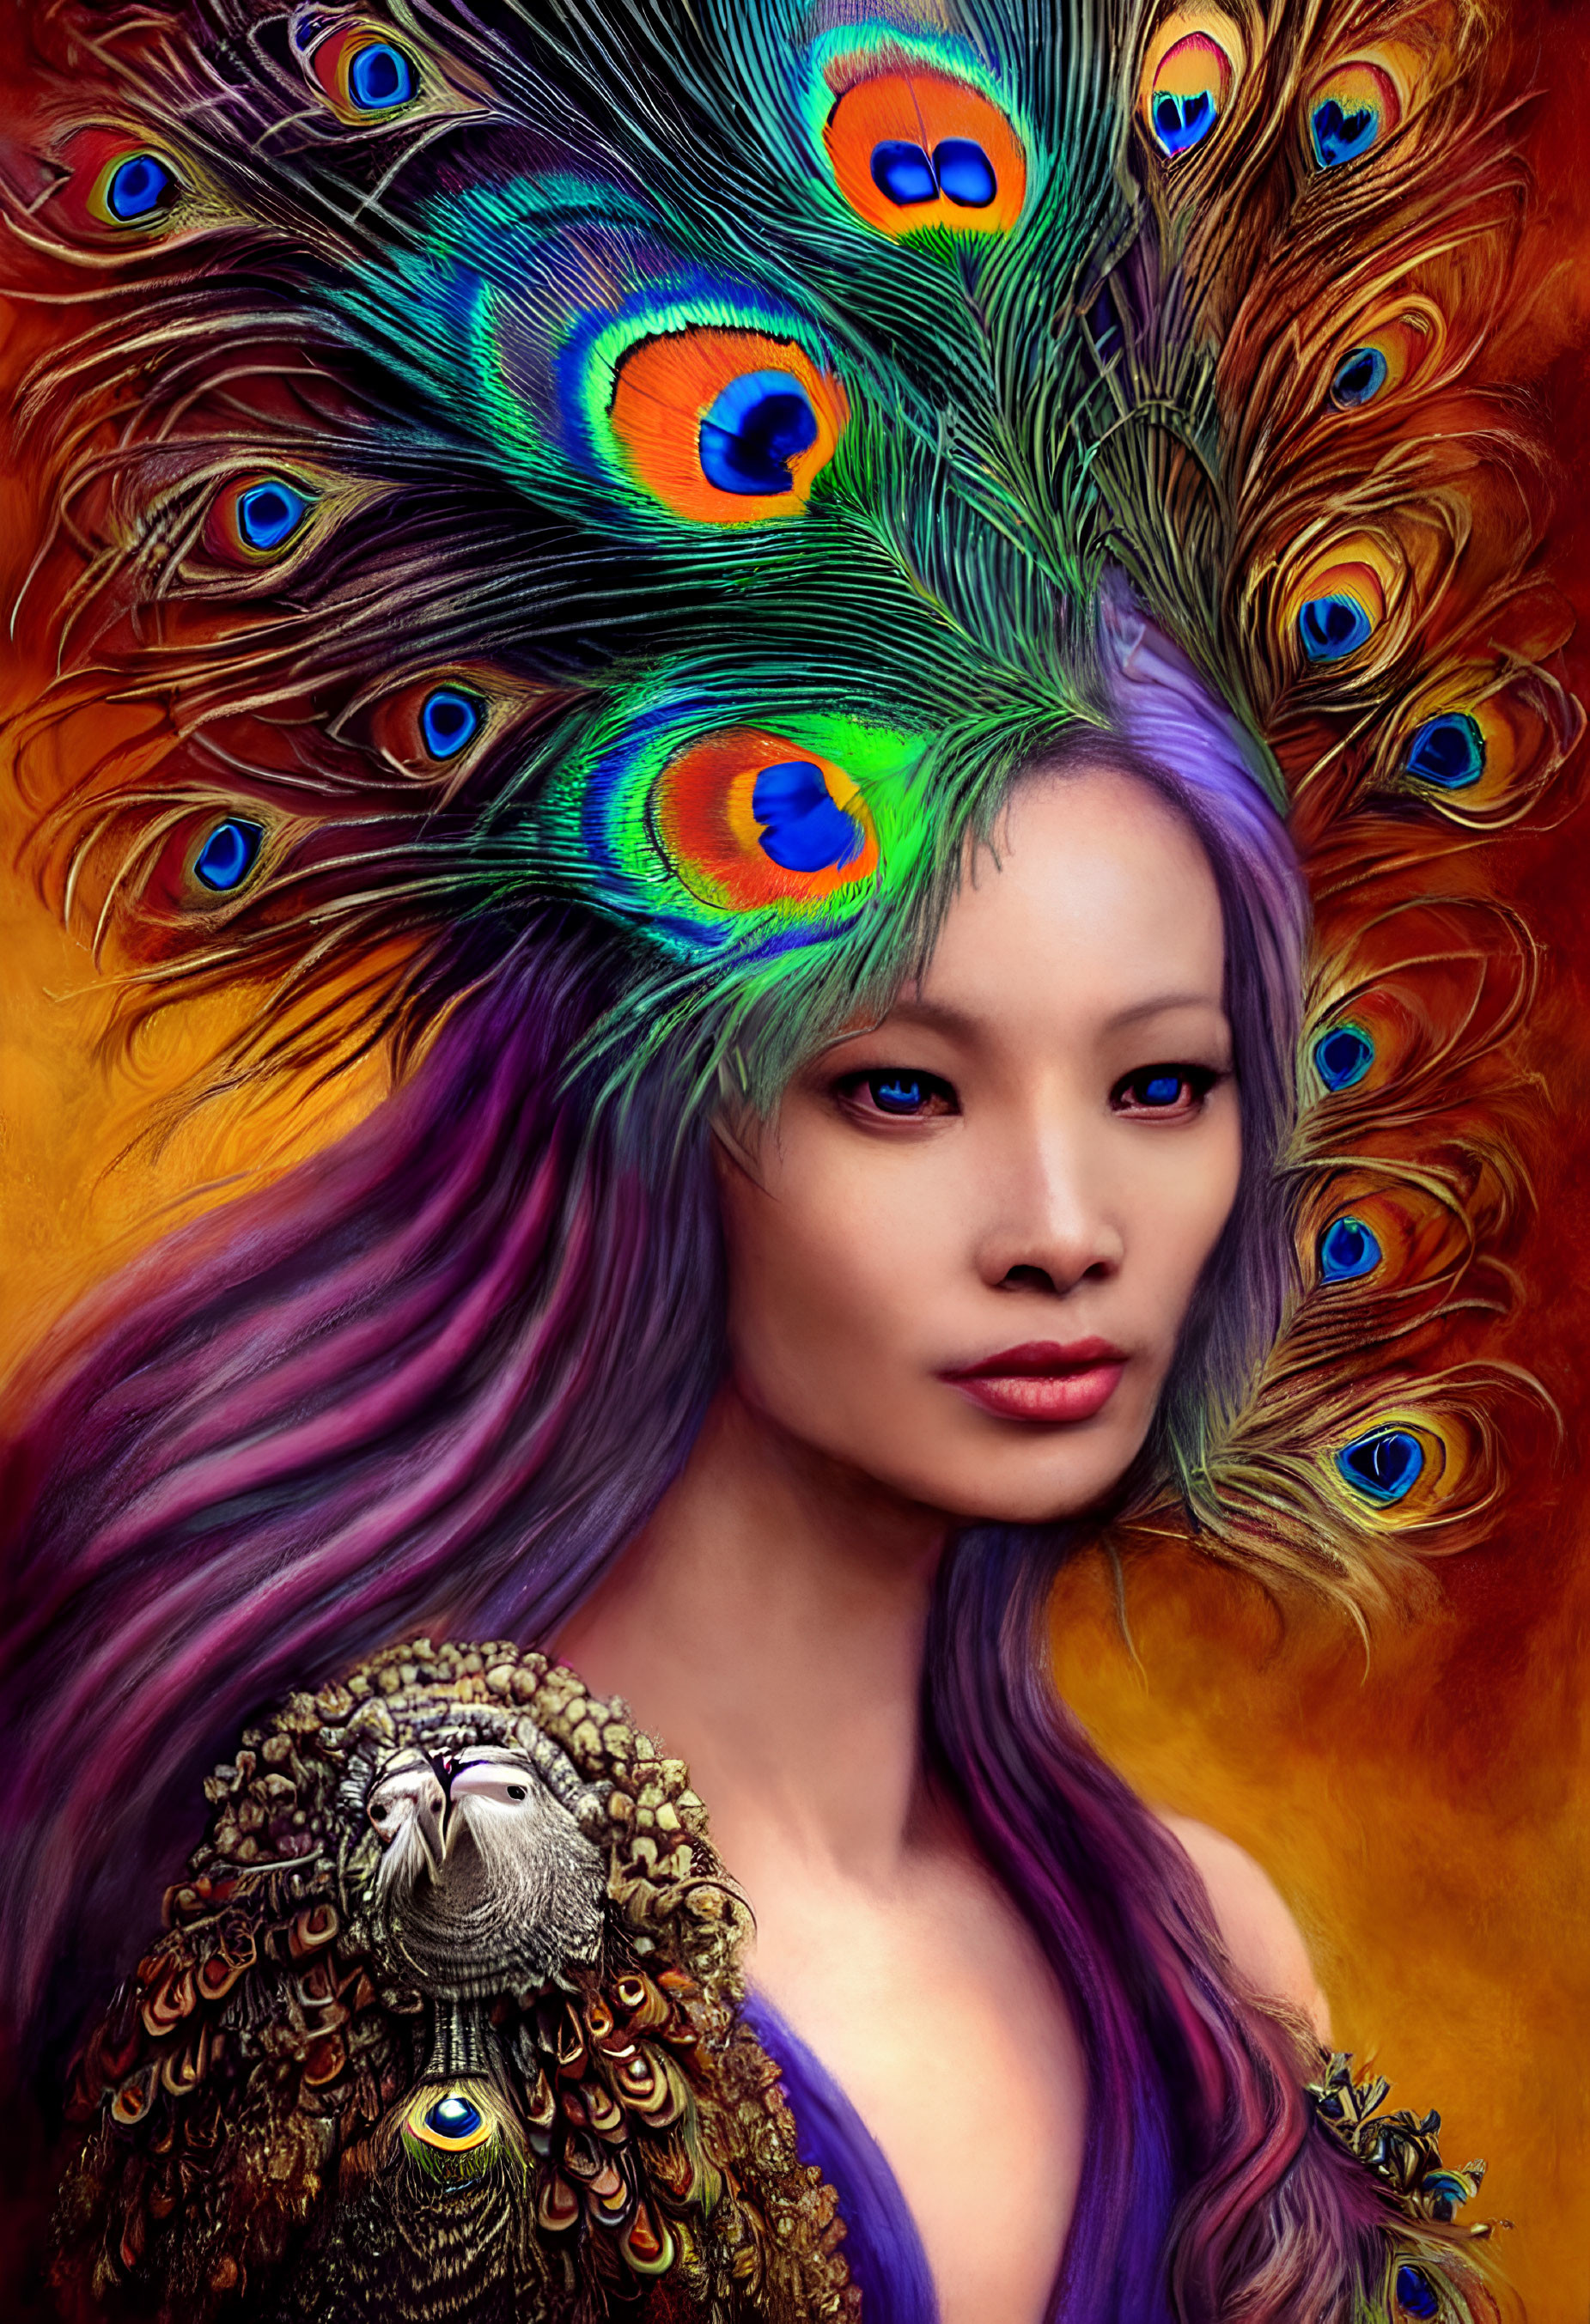 Digital Artwork: Woman with Purple Hair in Peacock Feather Headdress